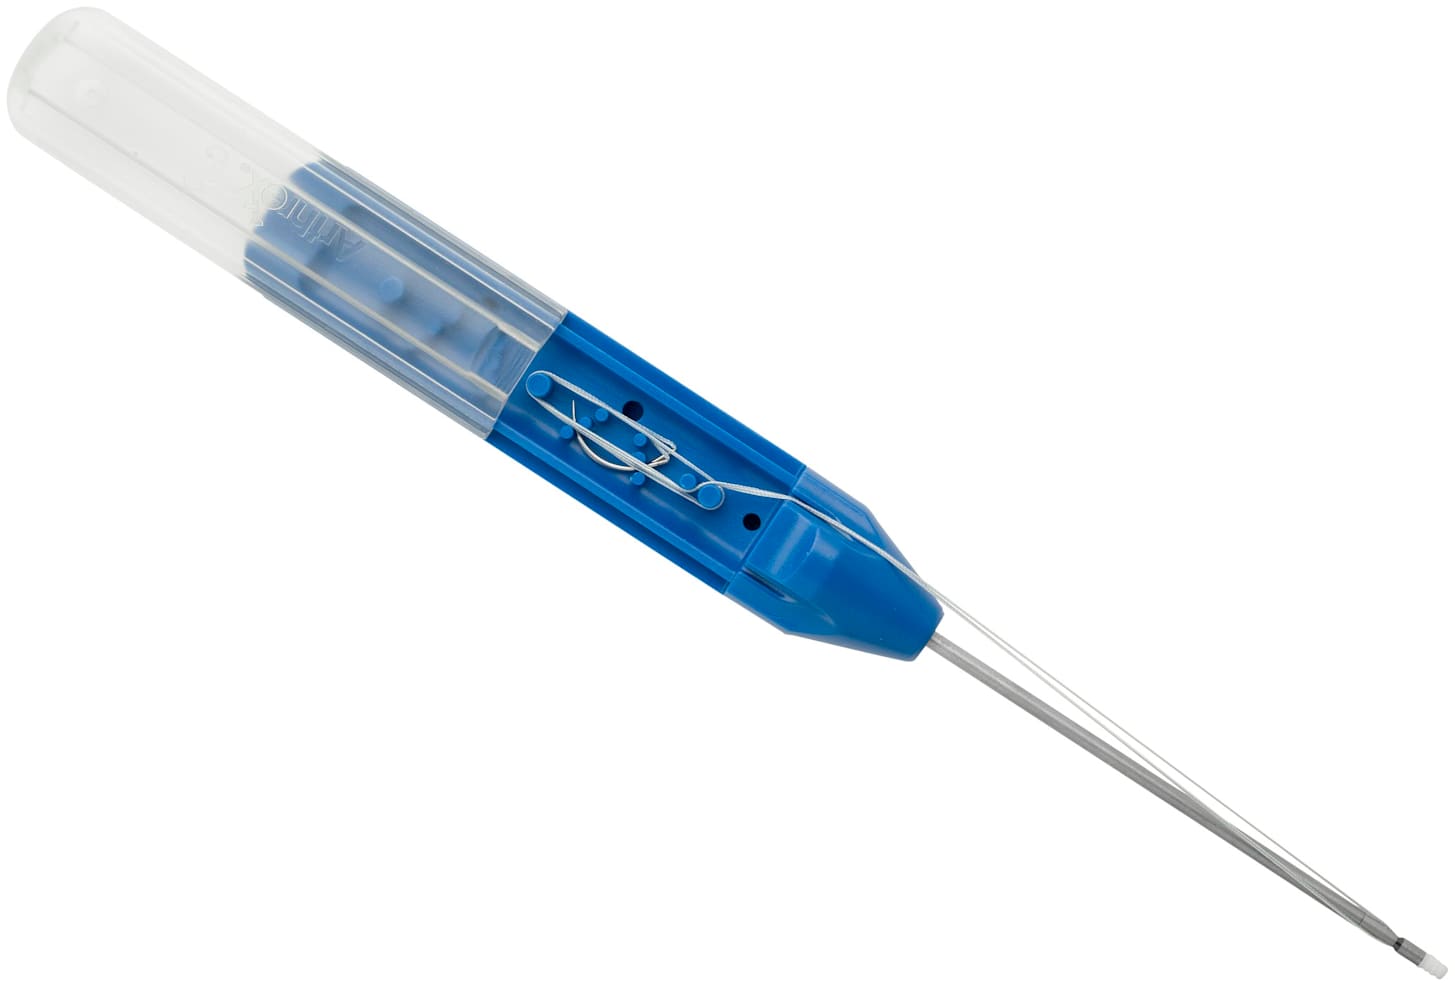 Micro BioComposite SutureTak with Needles with 2-0 FiberWire, 2.4 x 6.5 mm